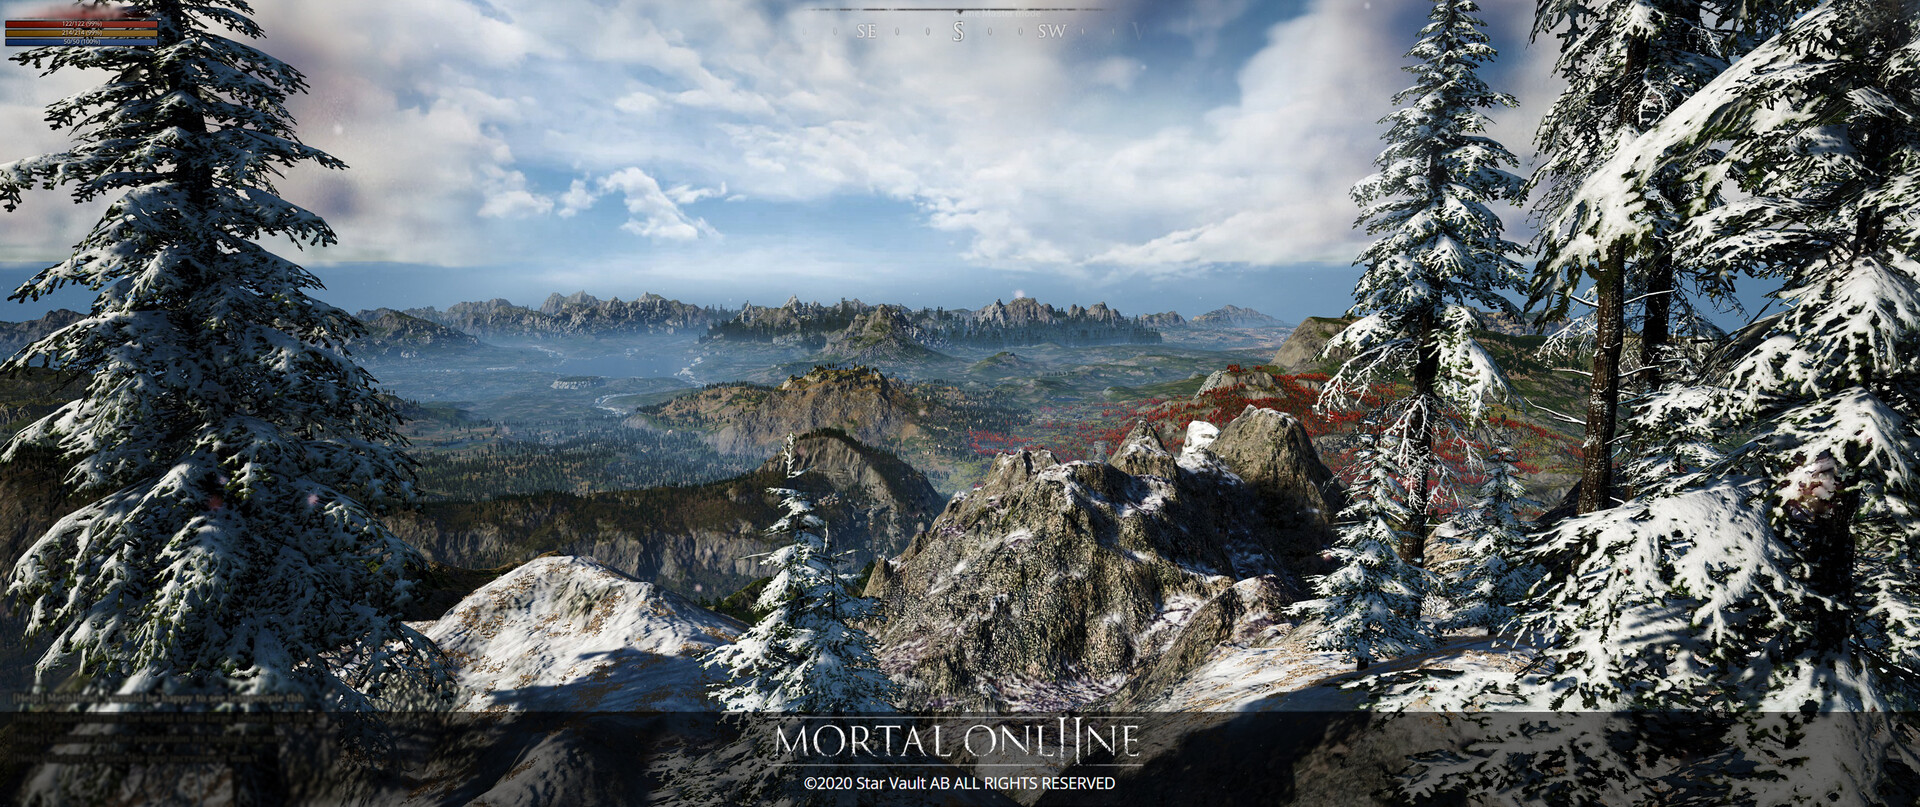 Mortal Online 2 on Steam